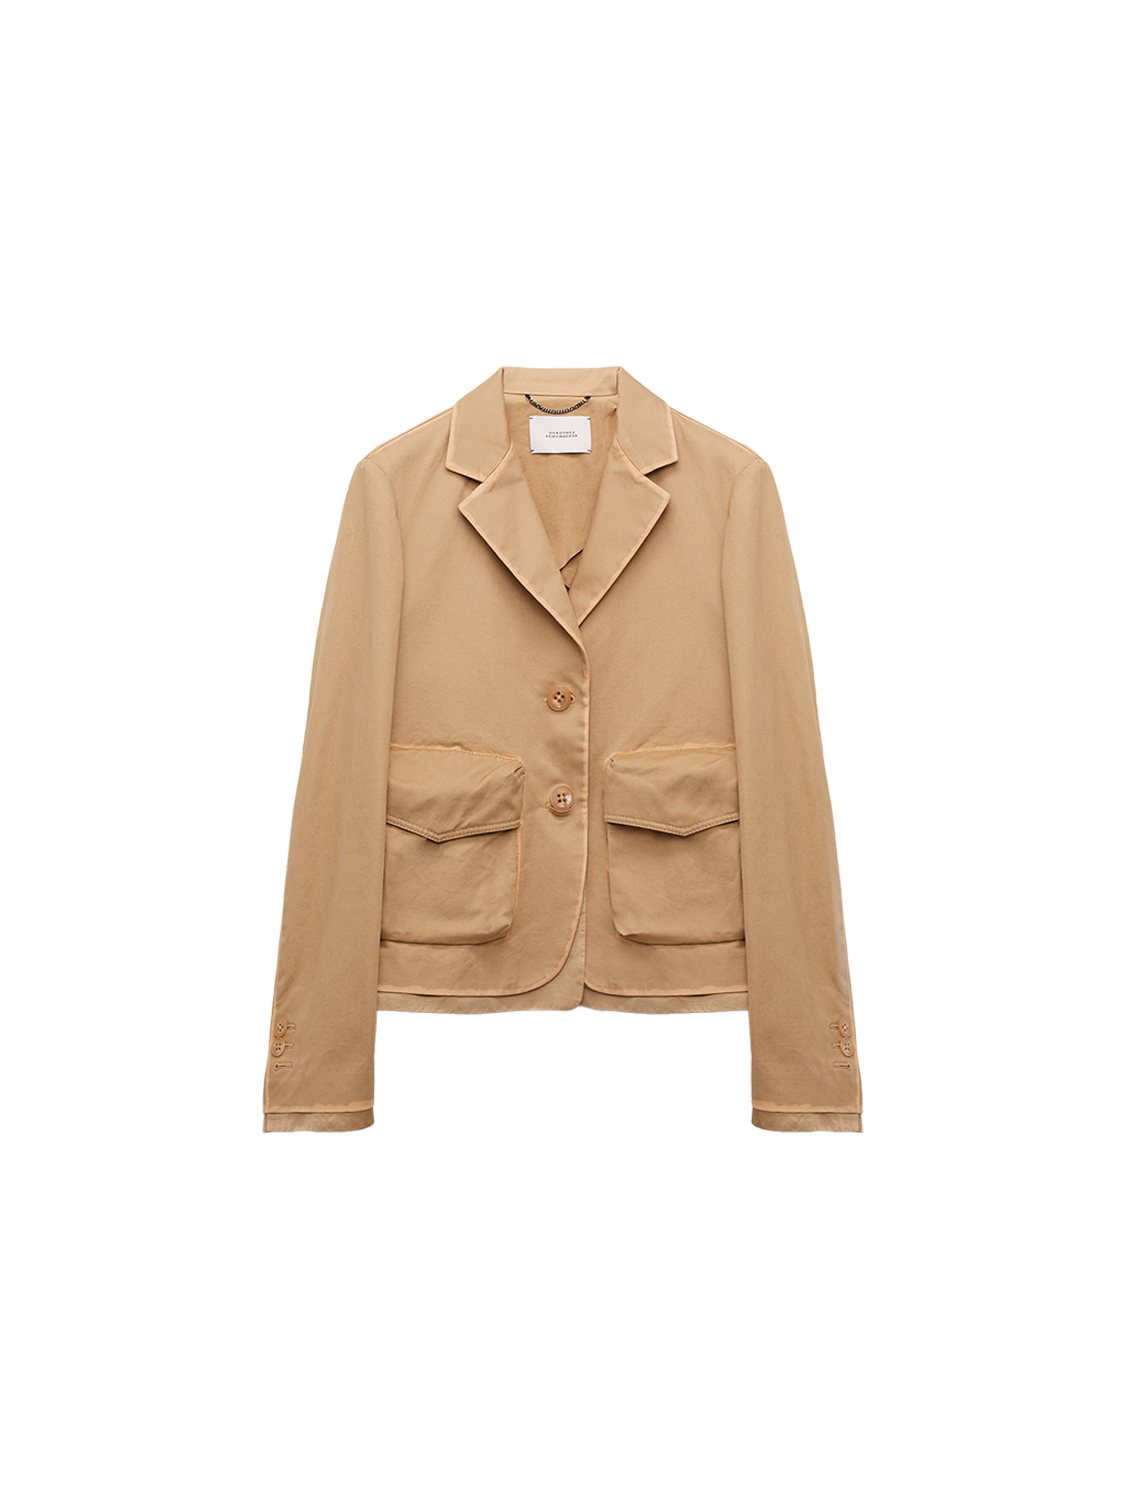 Perfect Match Jacket - Short blazer made of cotton 